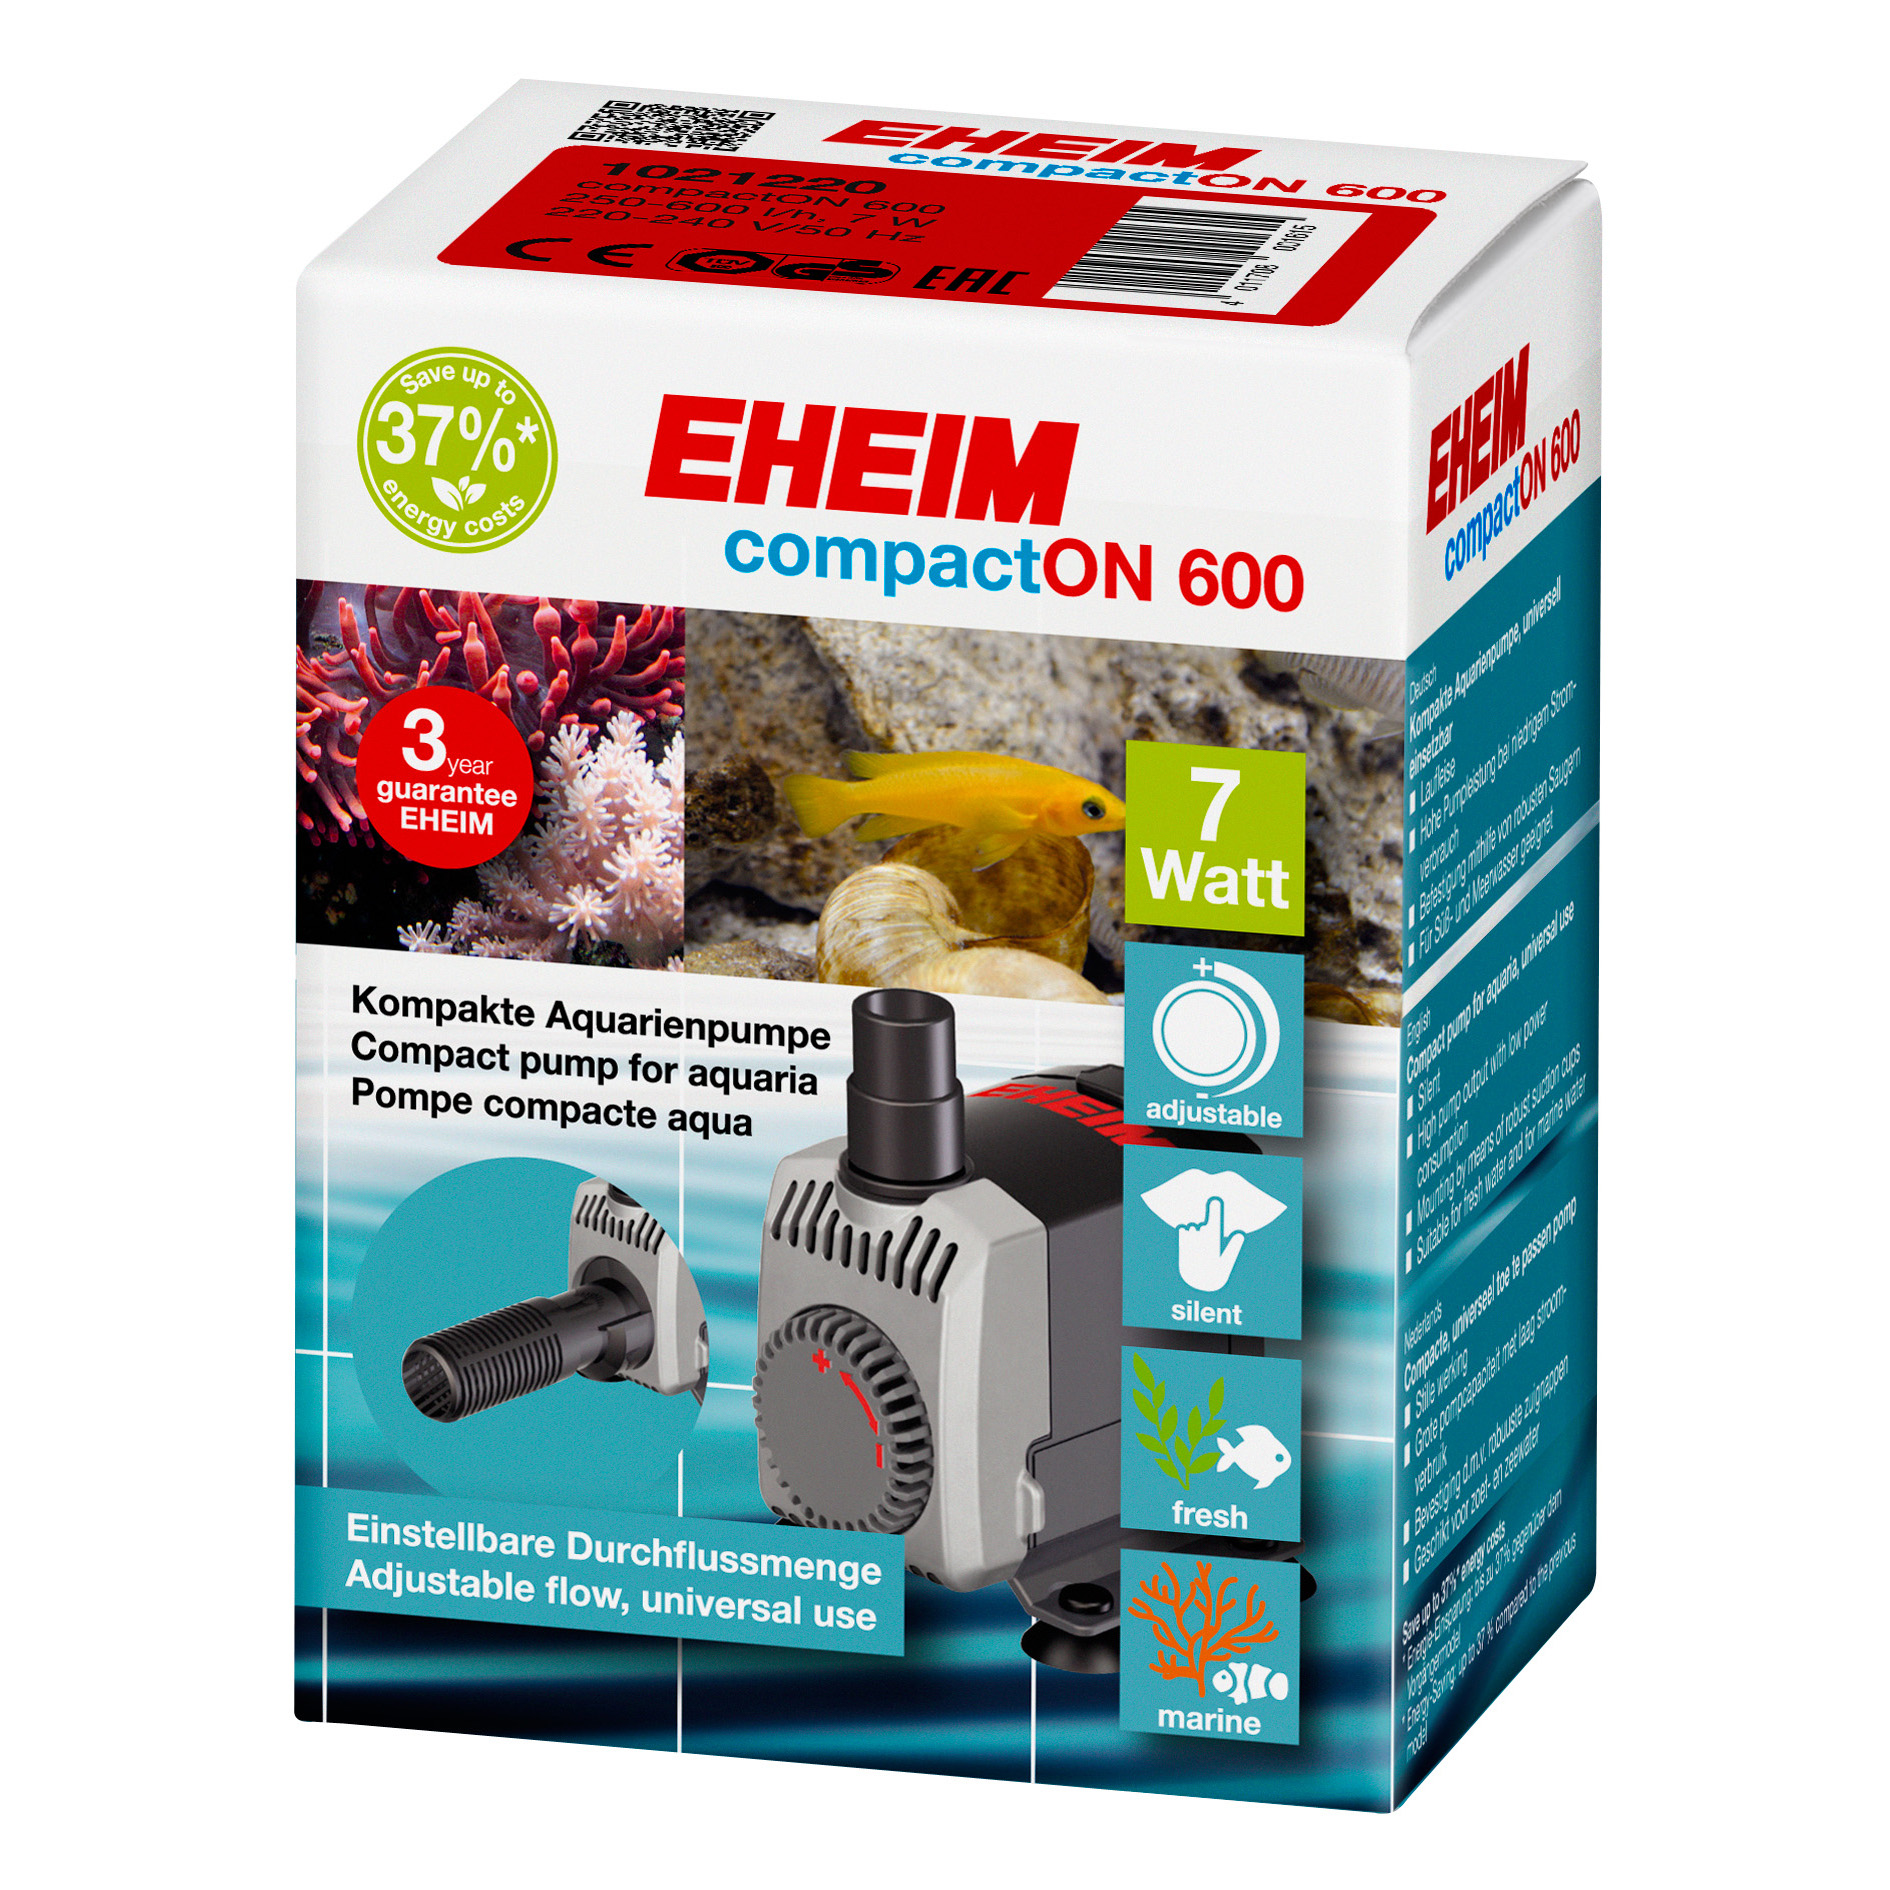 EHEIM compact ON WATER FLOW PUMP CIRCULATION SUMP AQUARIUM FISH